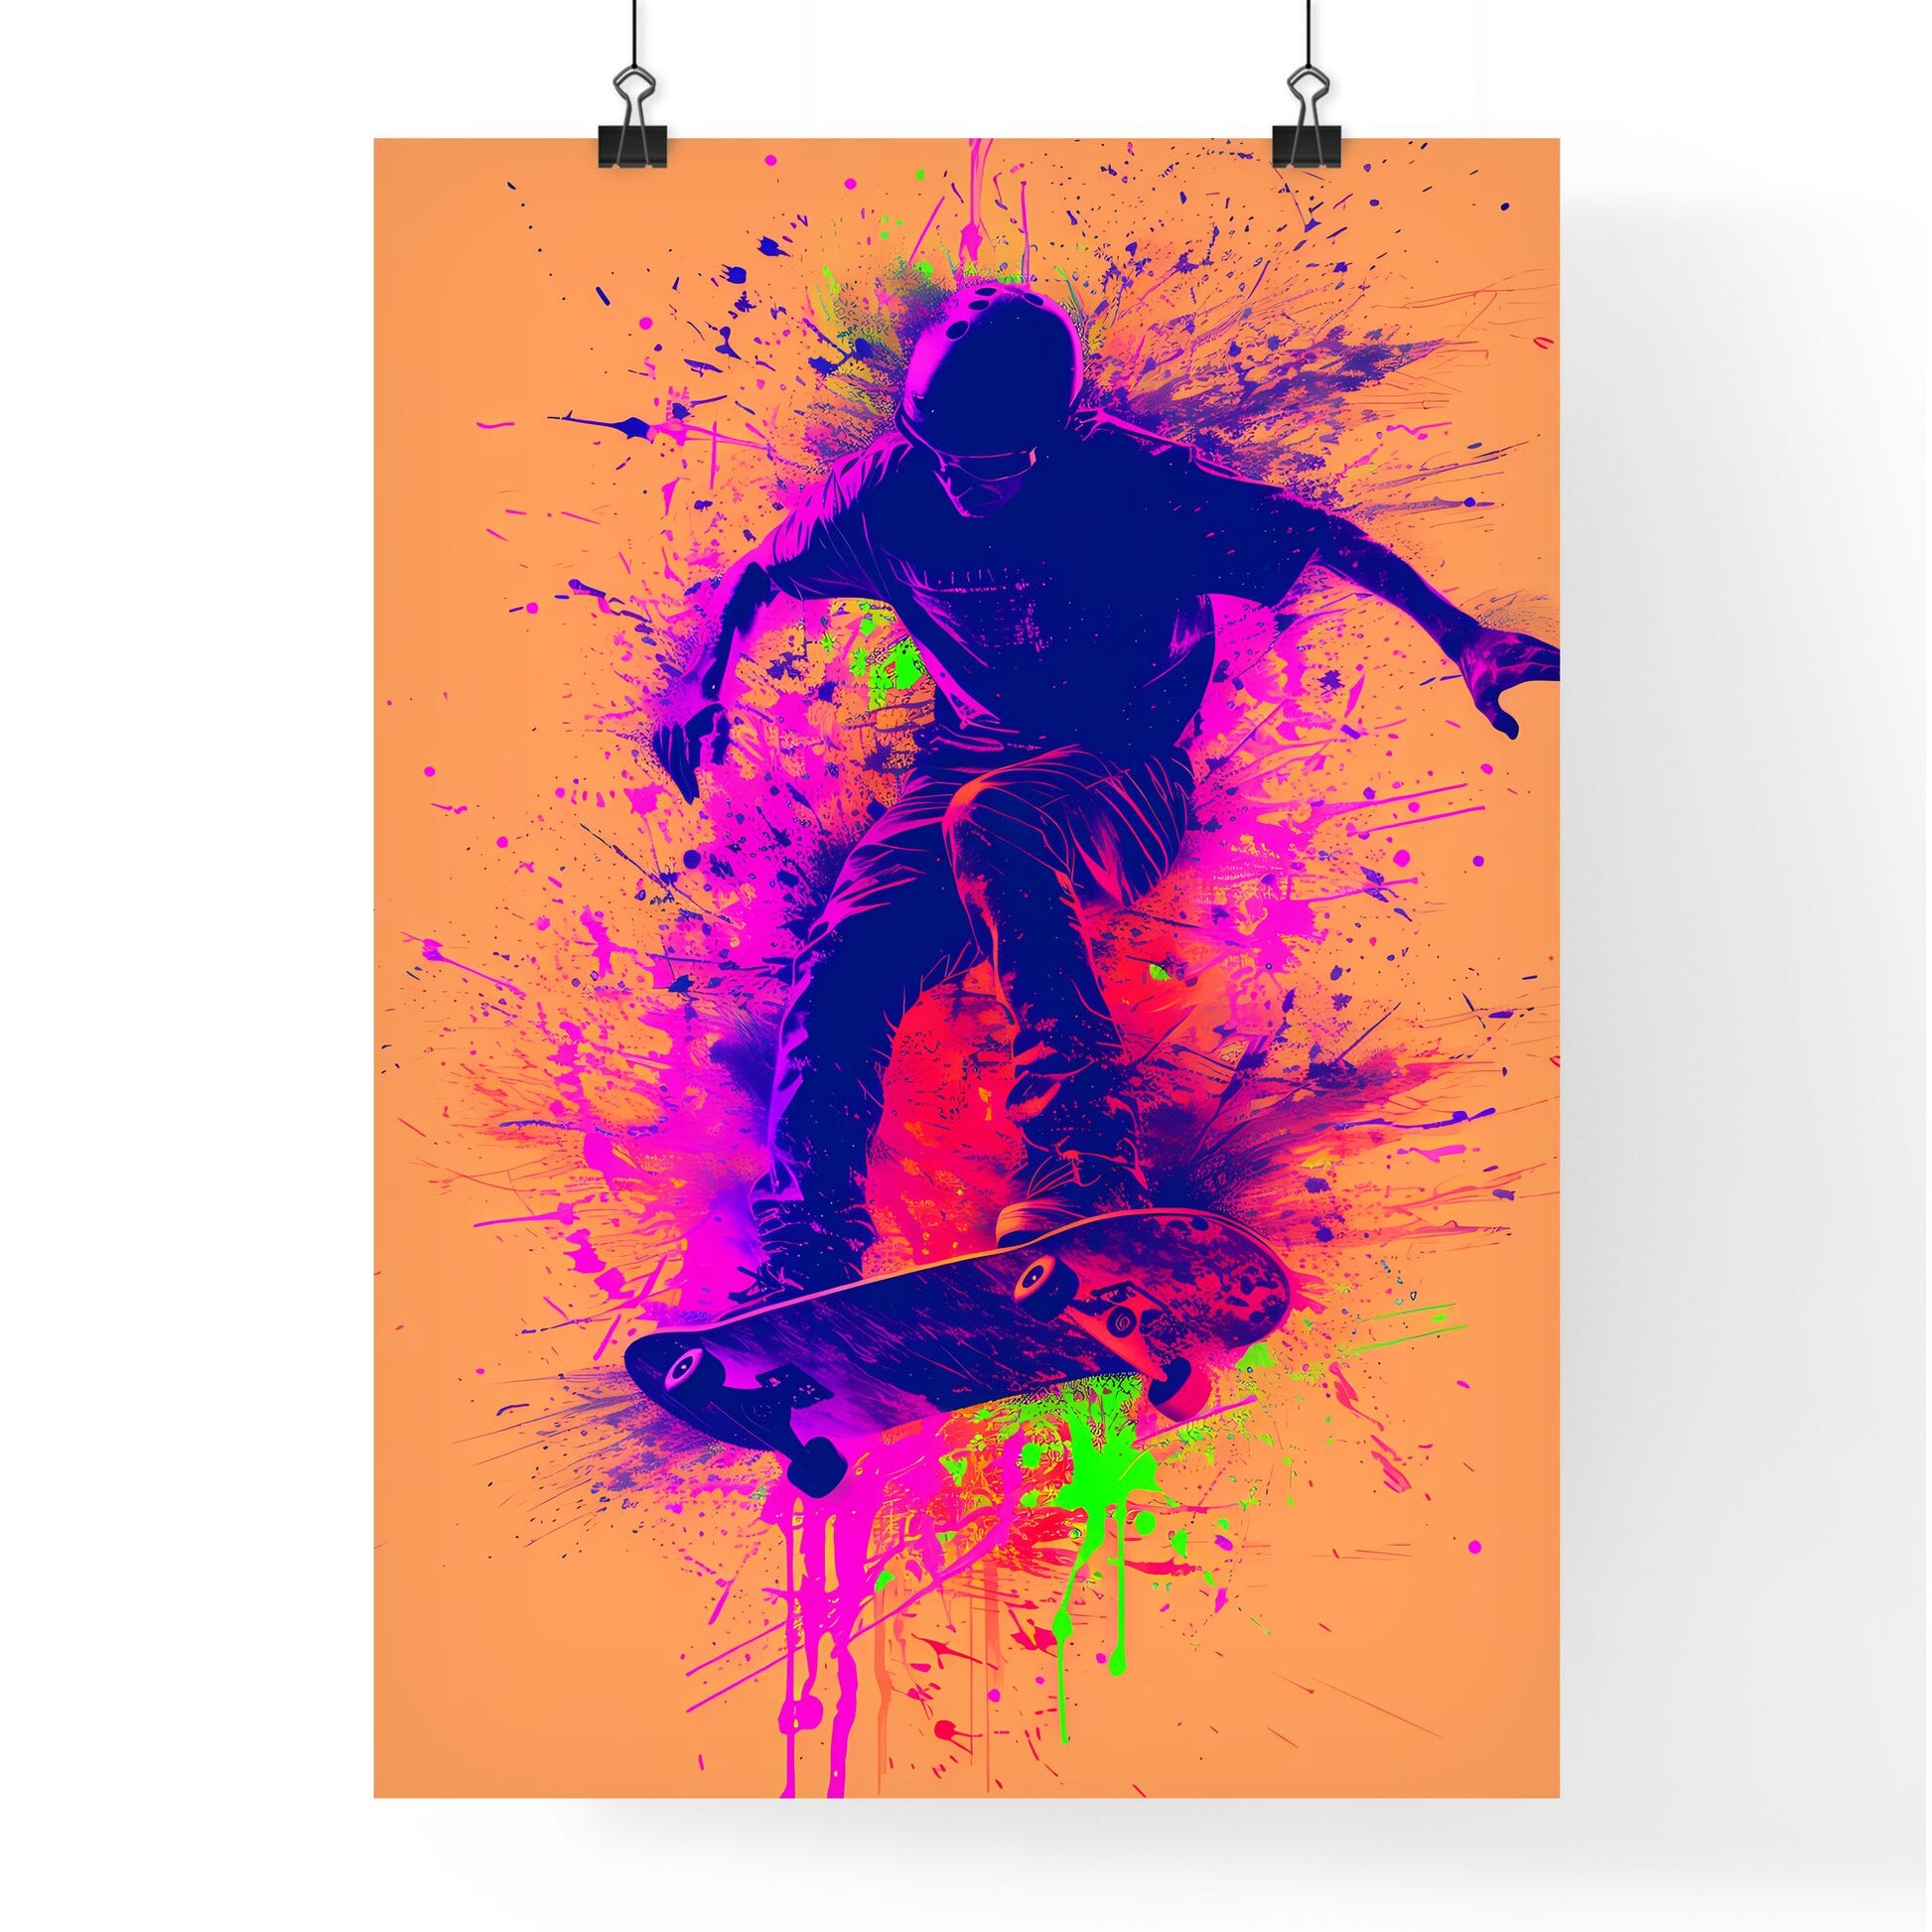 Snowboarding - Art print of a man on a skateboard Default Title